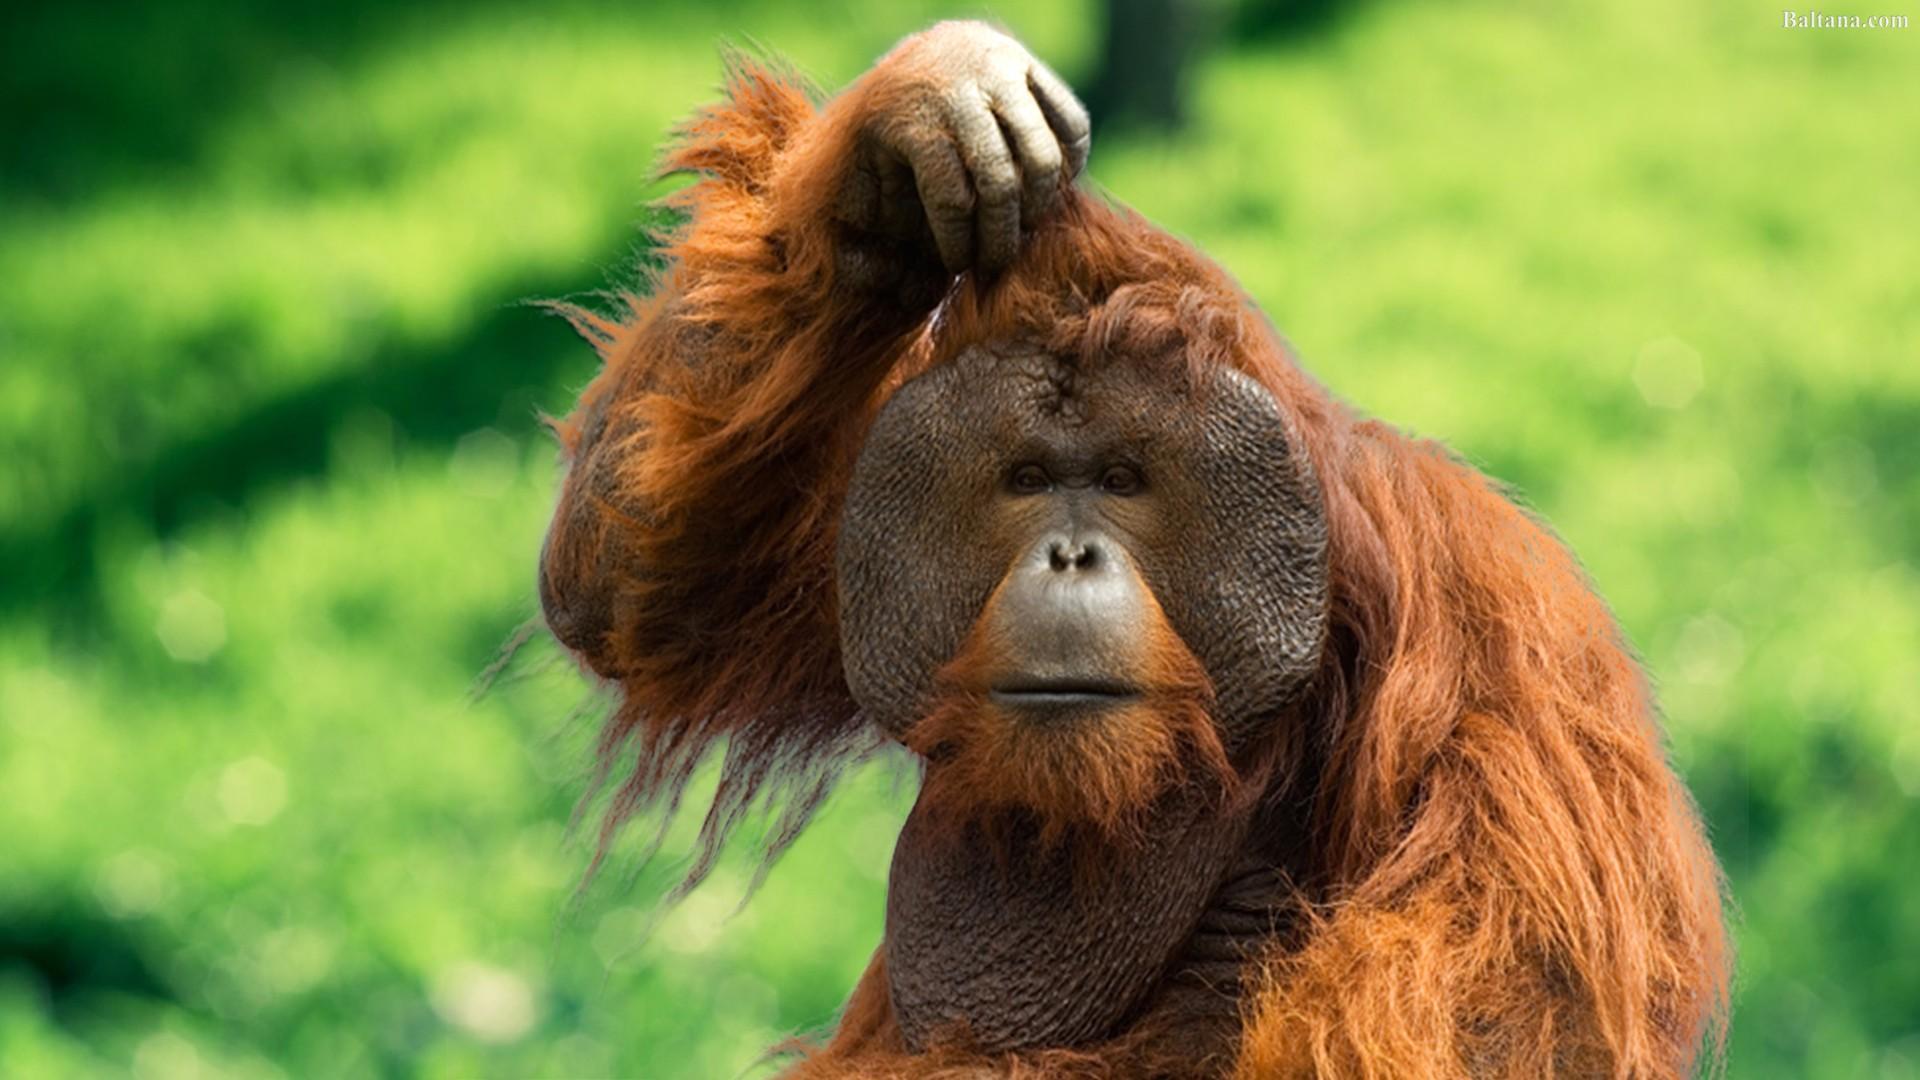 1000 Orangutan Pictures  Download Free Images on Unsplash